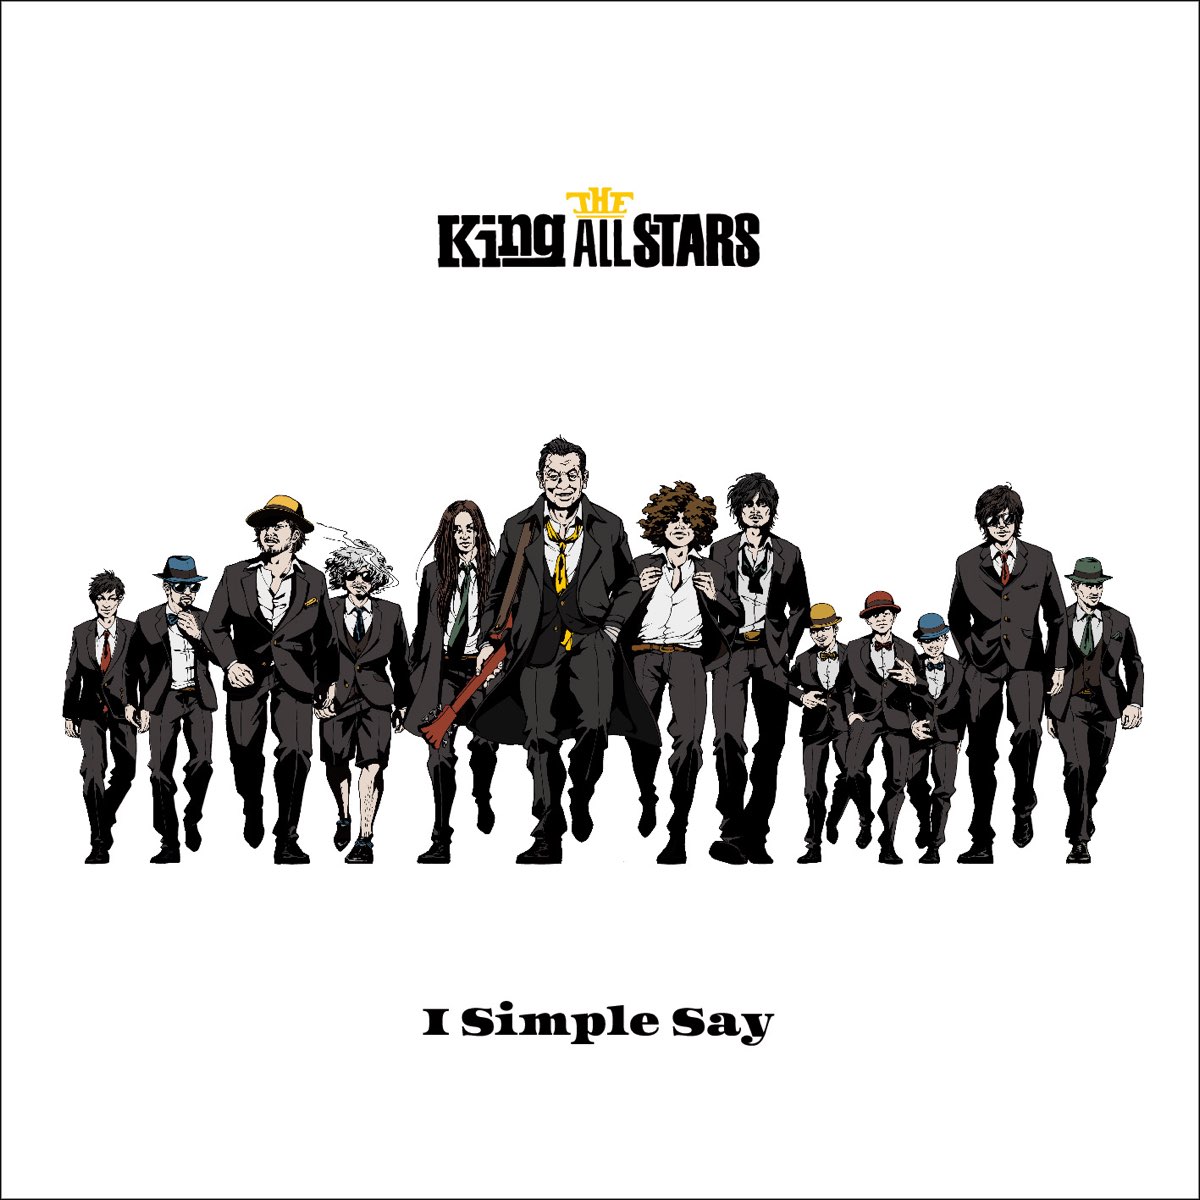 All Stars музыкальная группа. All Kings. All Star песня. Simon says CD. Simply saying